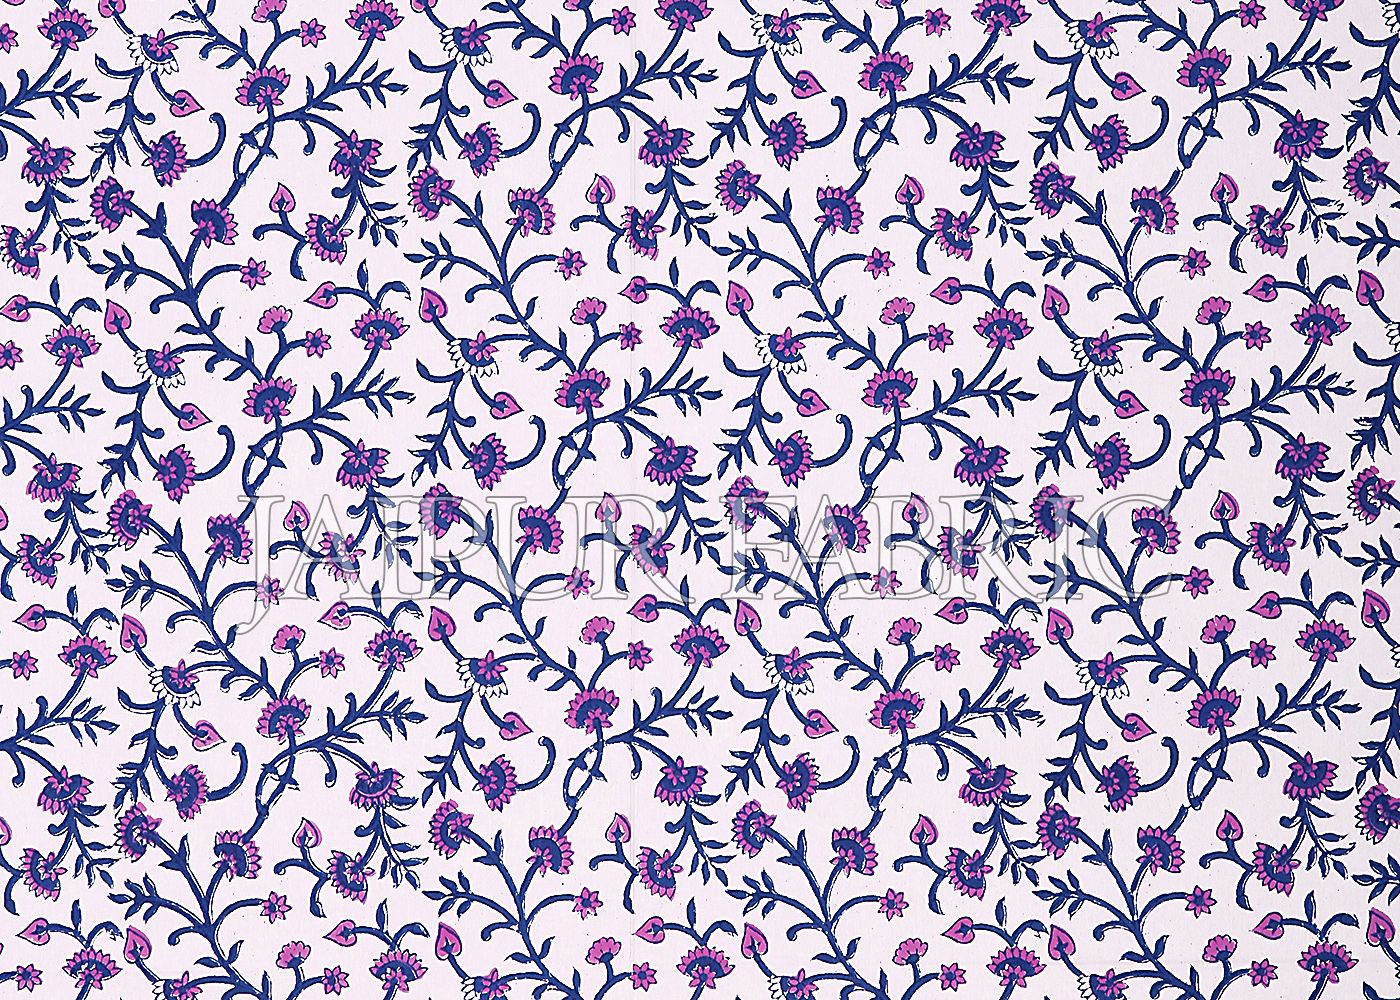 Blue Border Cream Base Leaf Pattern Block Print Cotton Double Bed Sheet